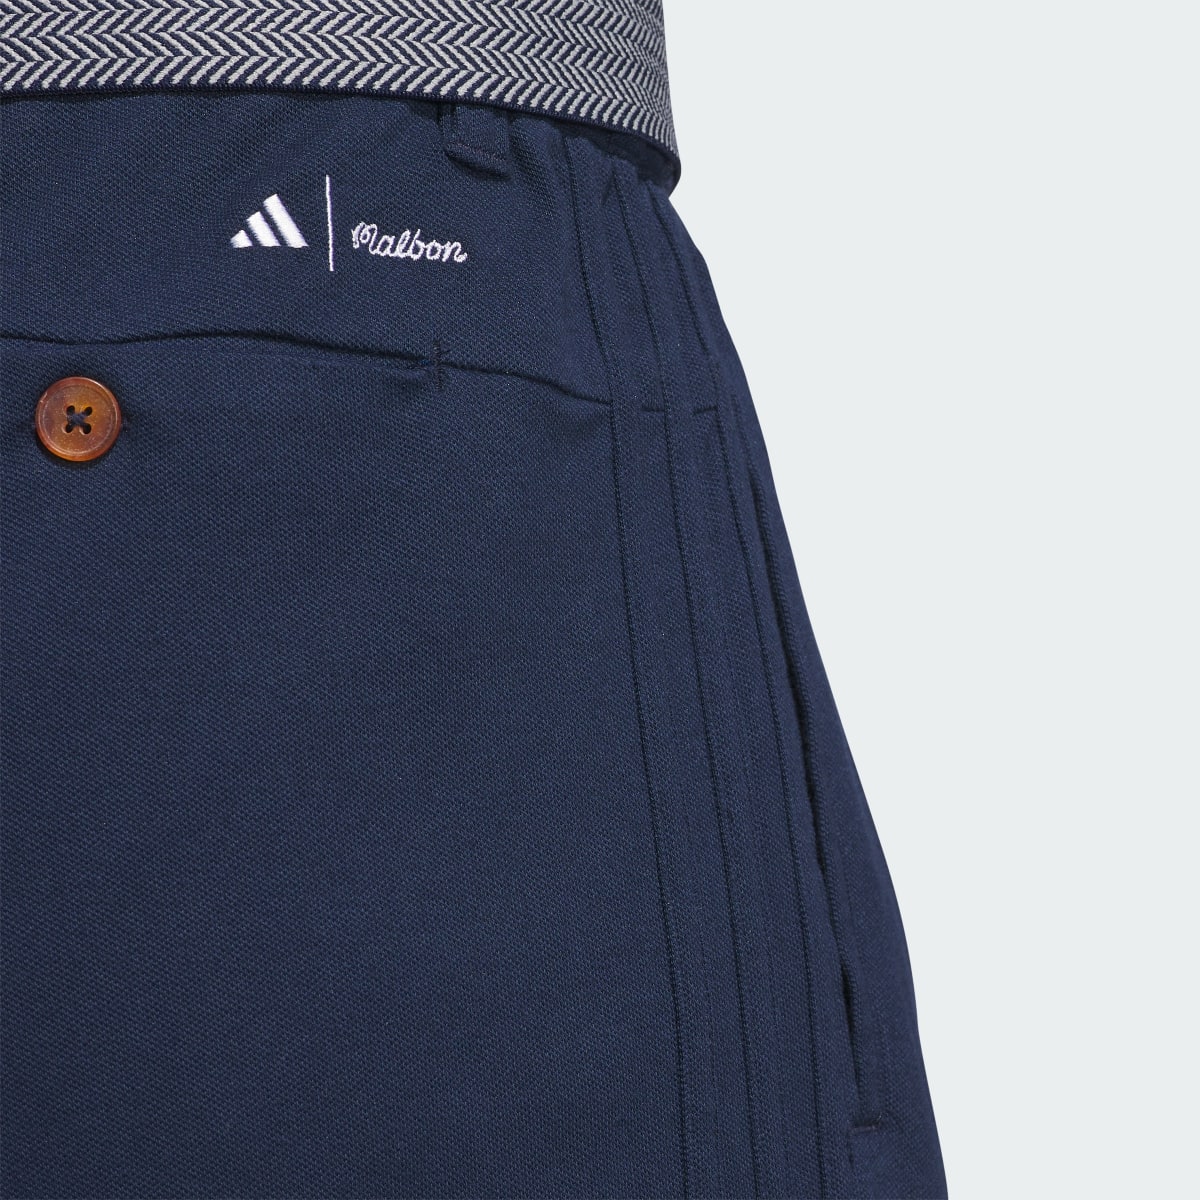 Adidas Spodnie Malbon. 5